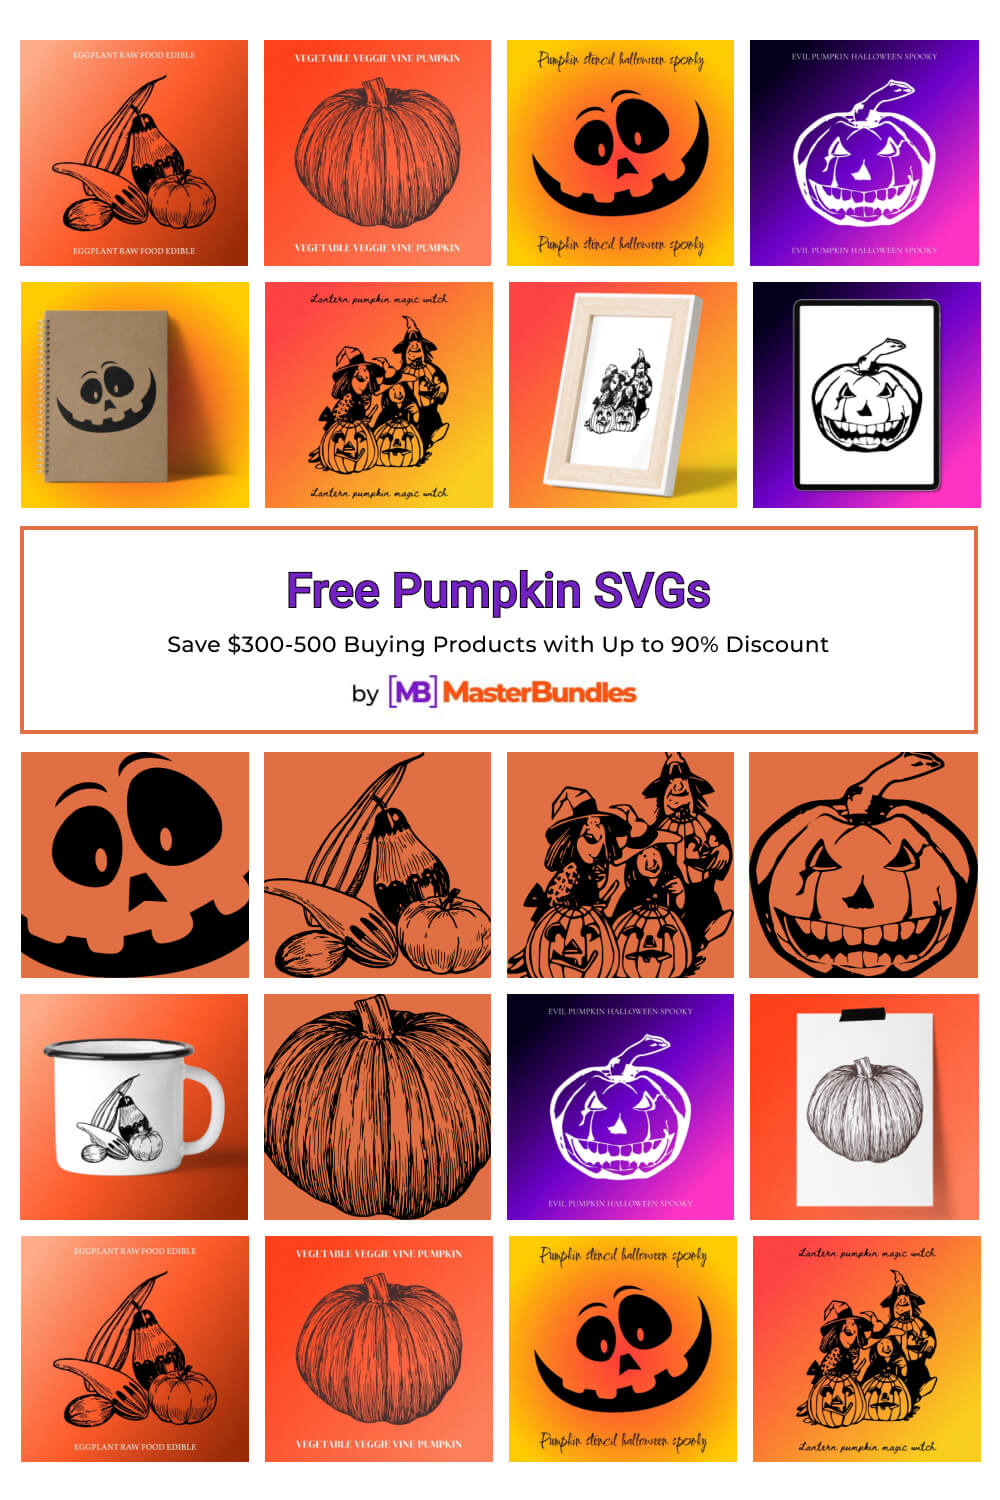 free pumpkin svgs pinterest image.